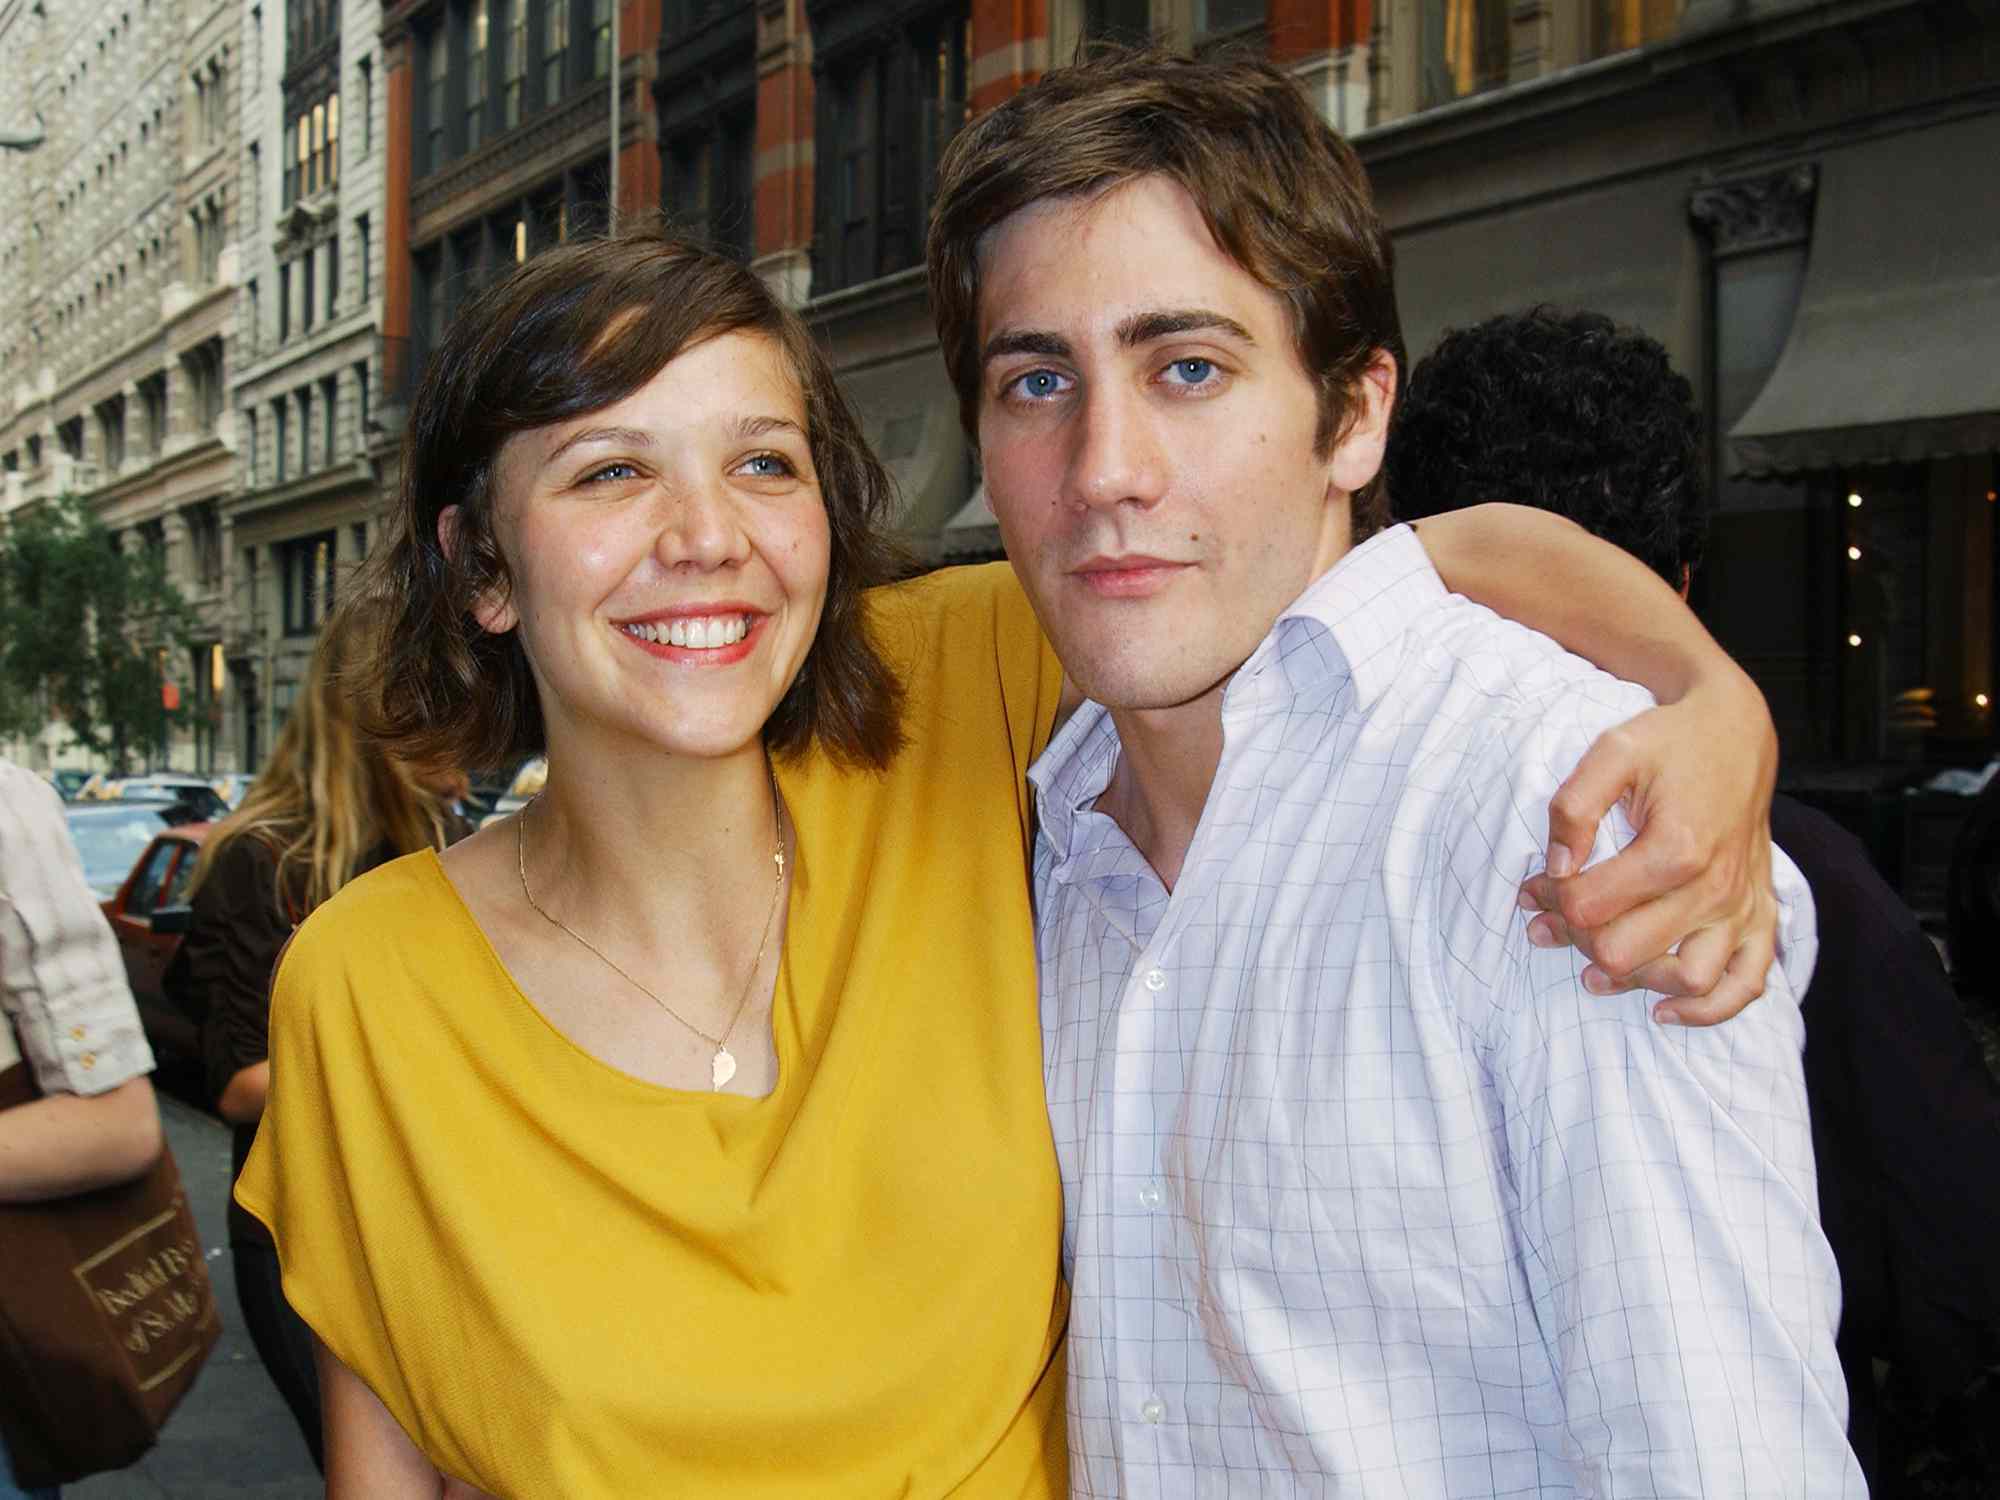 Jake Gyllenhaal gets a hug from his sister, actress Maggie Gyllenhaal